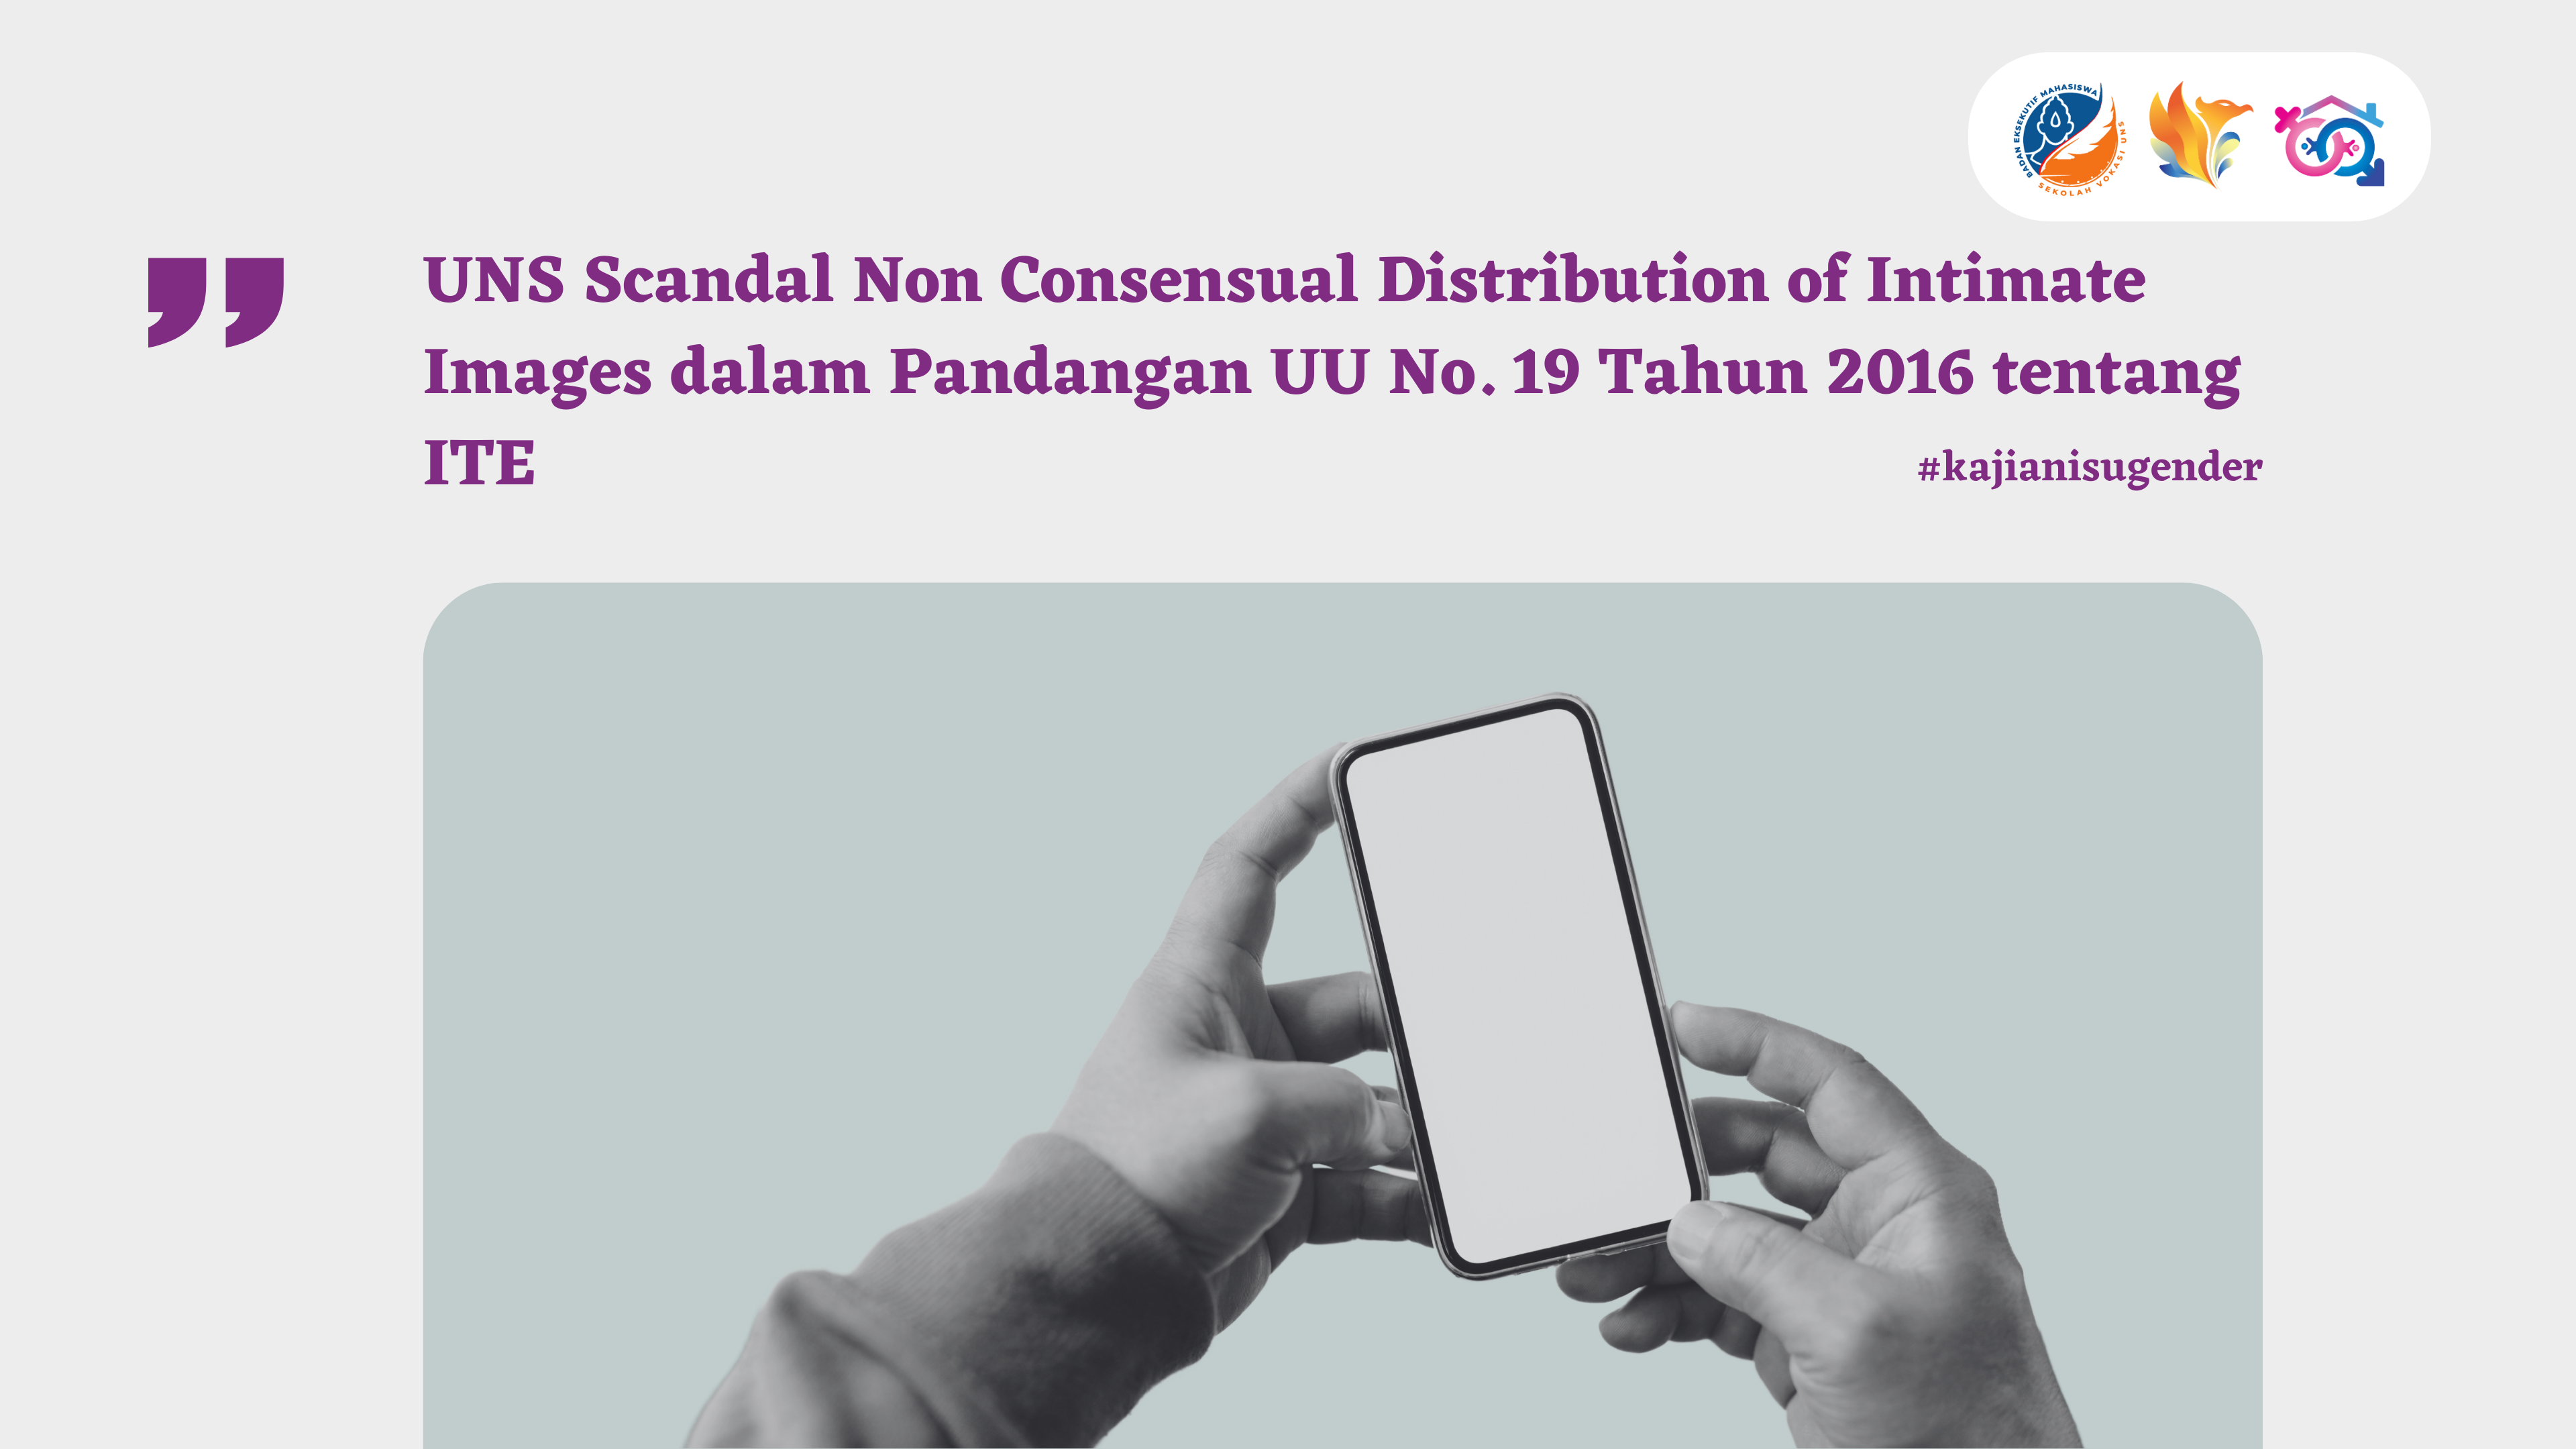 UNS Scandal Non Consensual Distribution of Intimate Images dalam Pandangan UU No. 19 Tahun 2016 tentang ITE